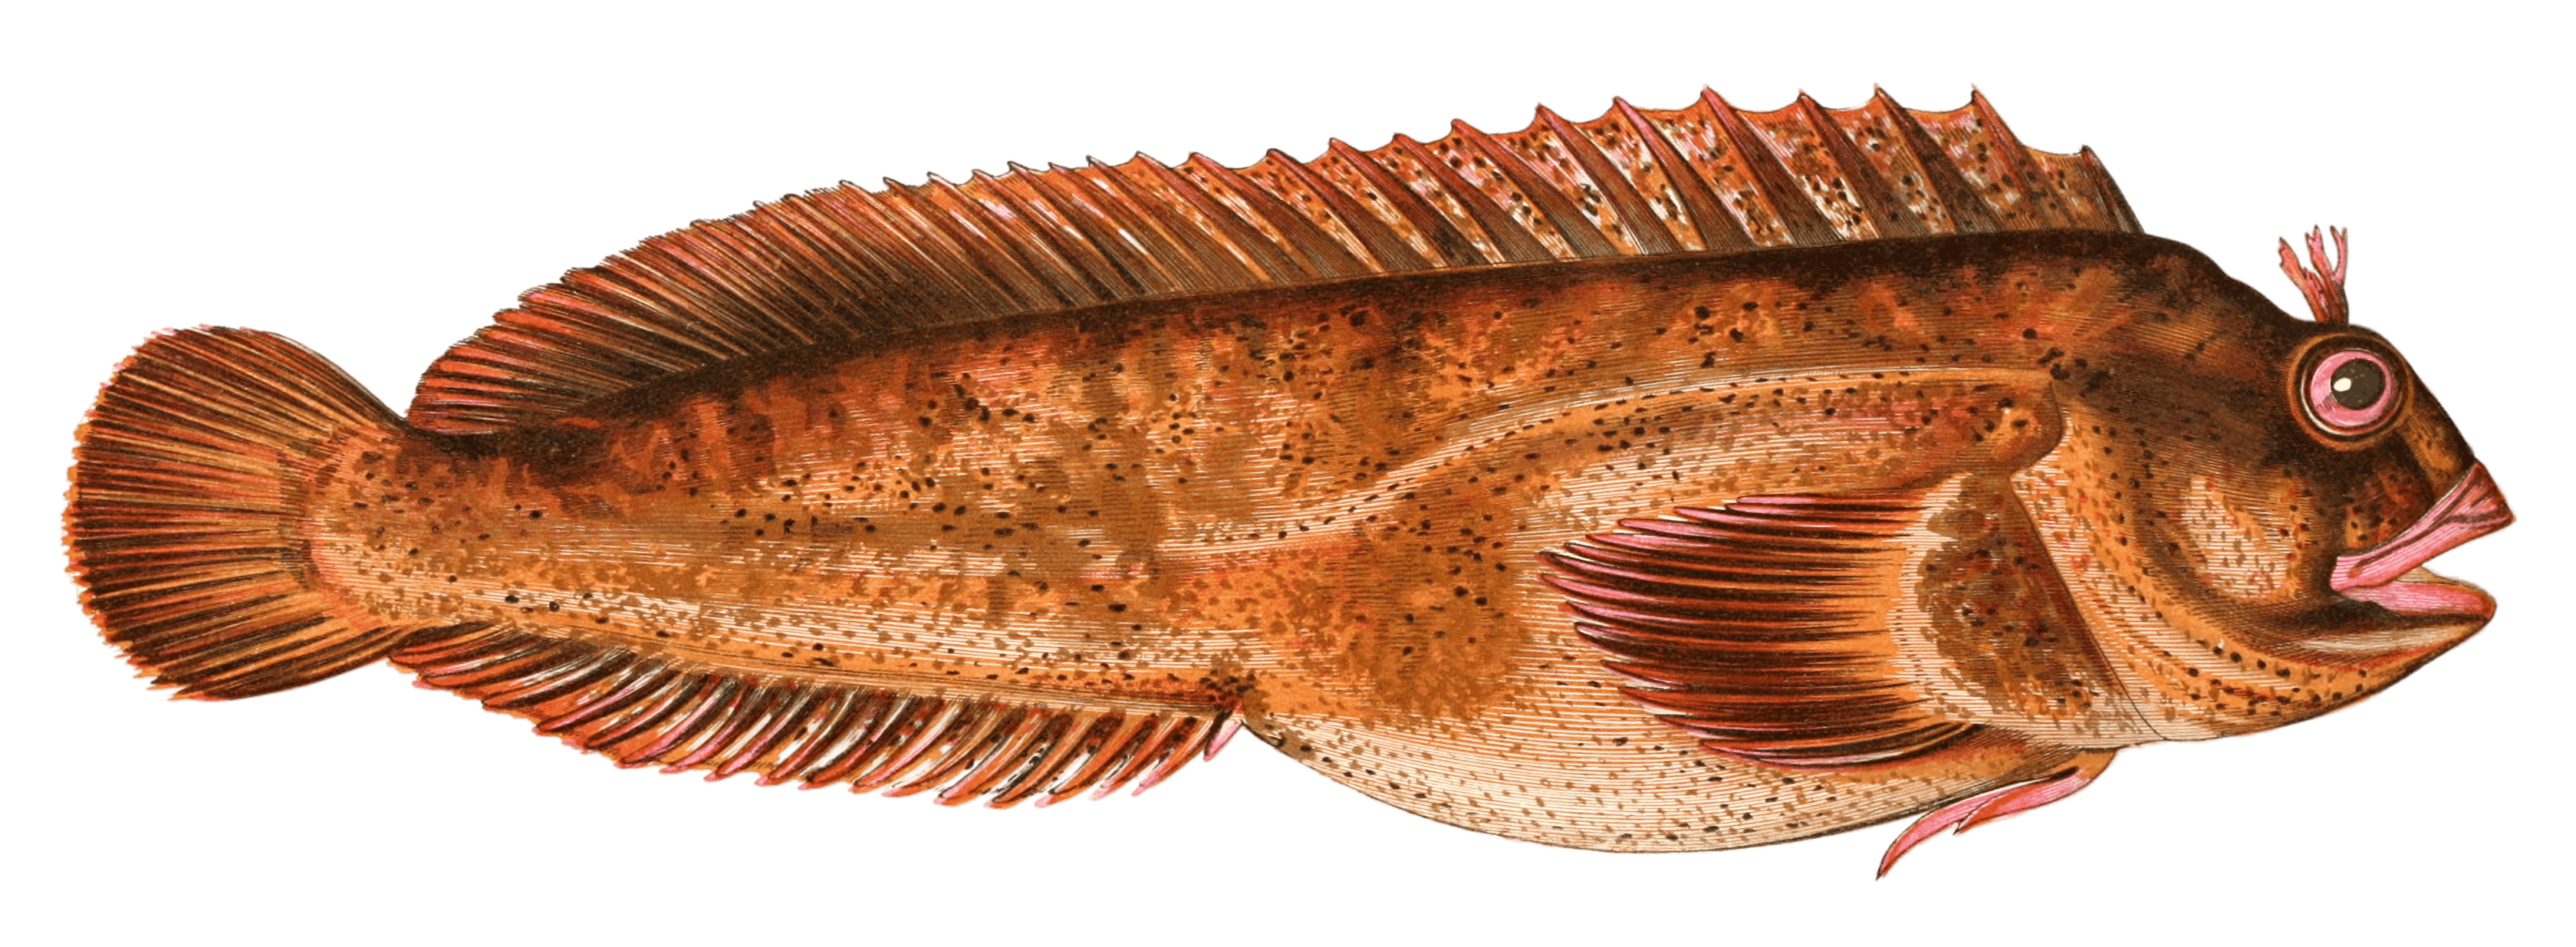 Guttorugine Fish Vintage Illustration